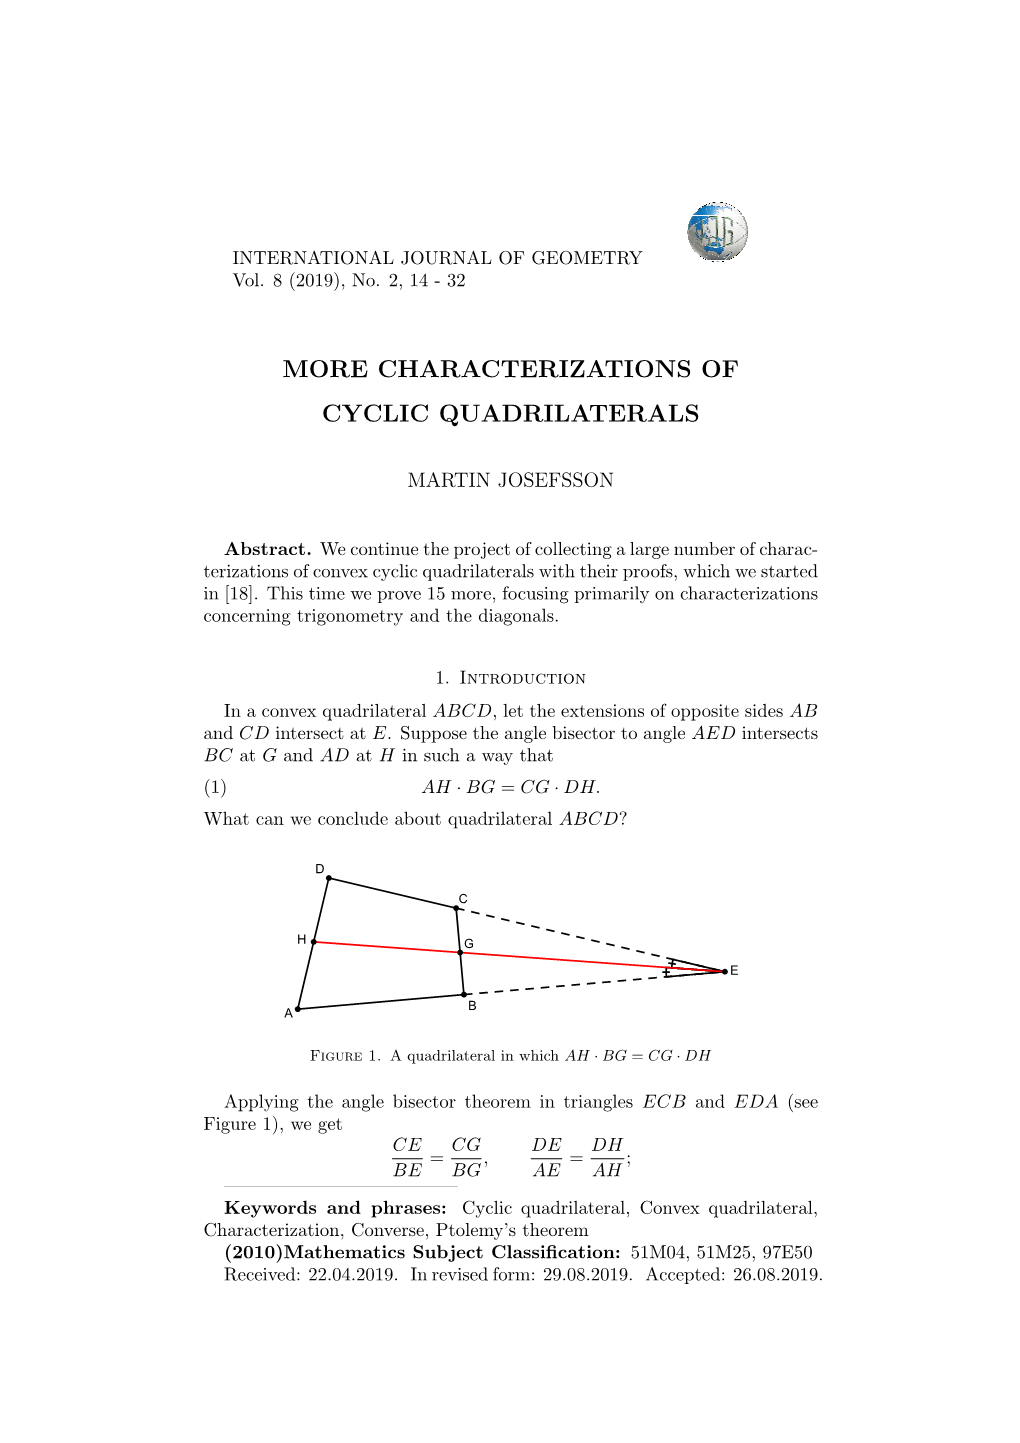 Characterizations of Cyclic Quadrilaterals